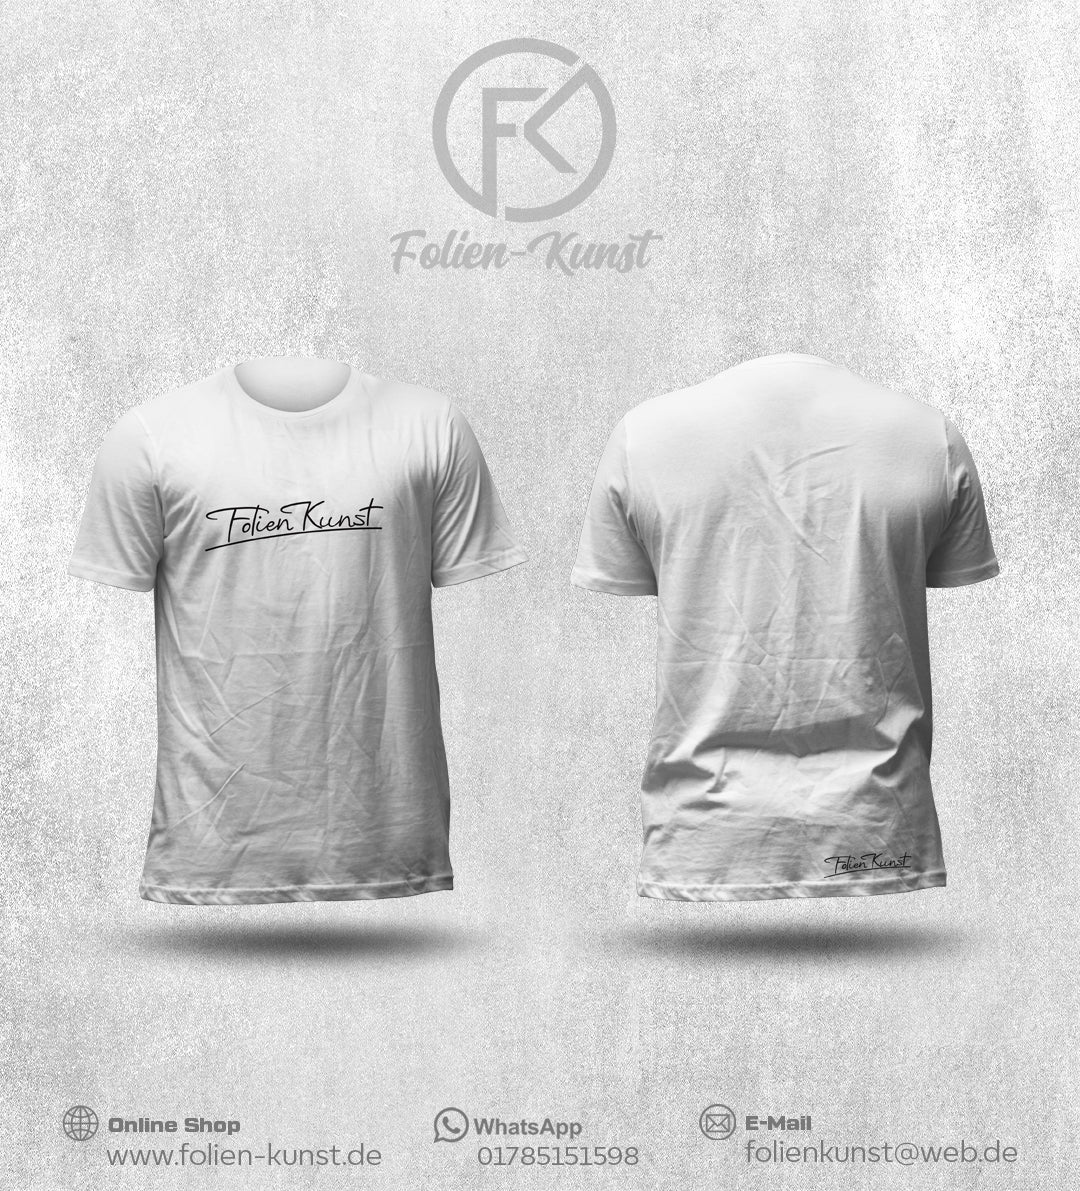 Folien-Kunst Original Premium T-Shirt